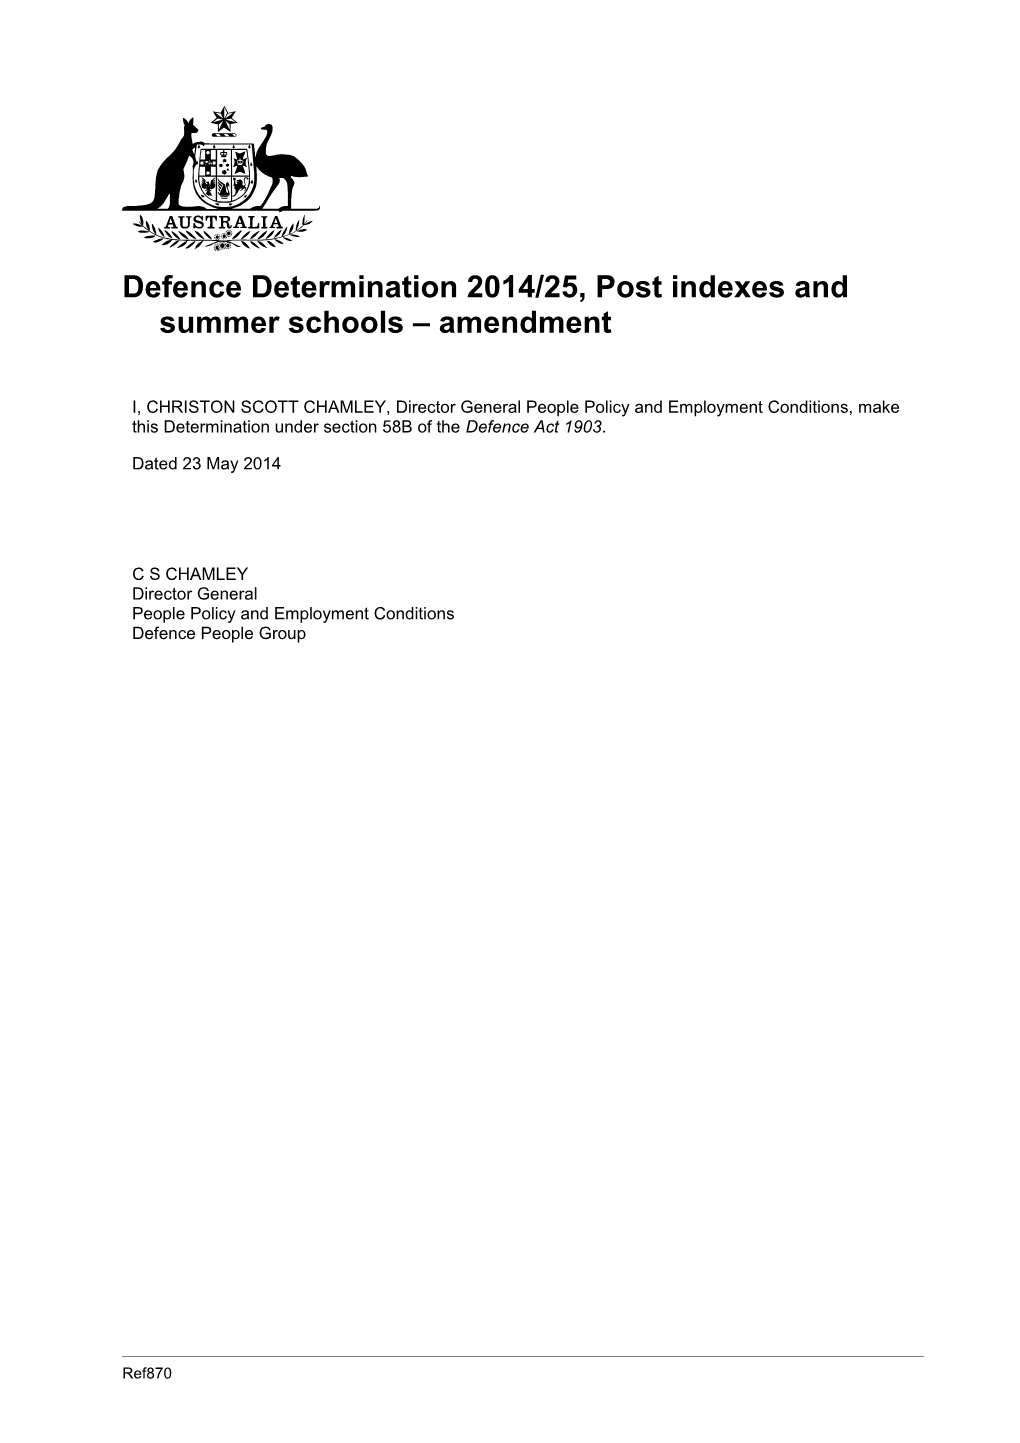 Defence Determination 2014/25, Post Indexes and Summer Schools Amendment